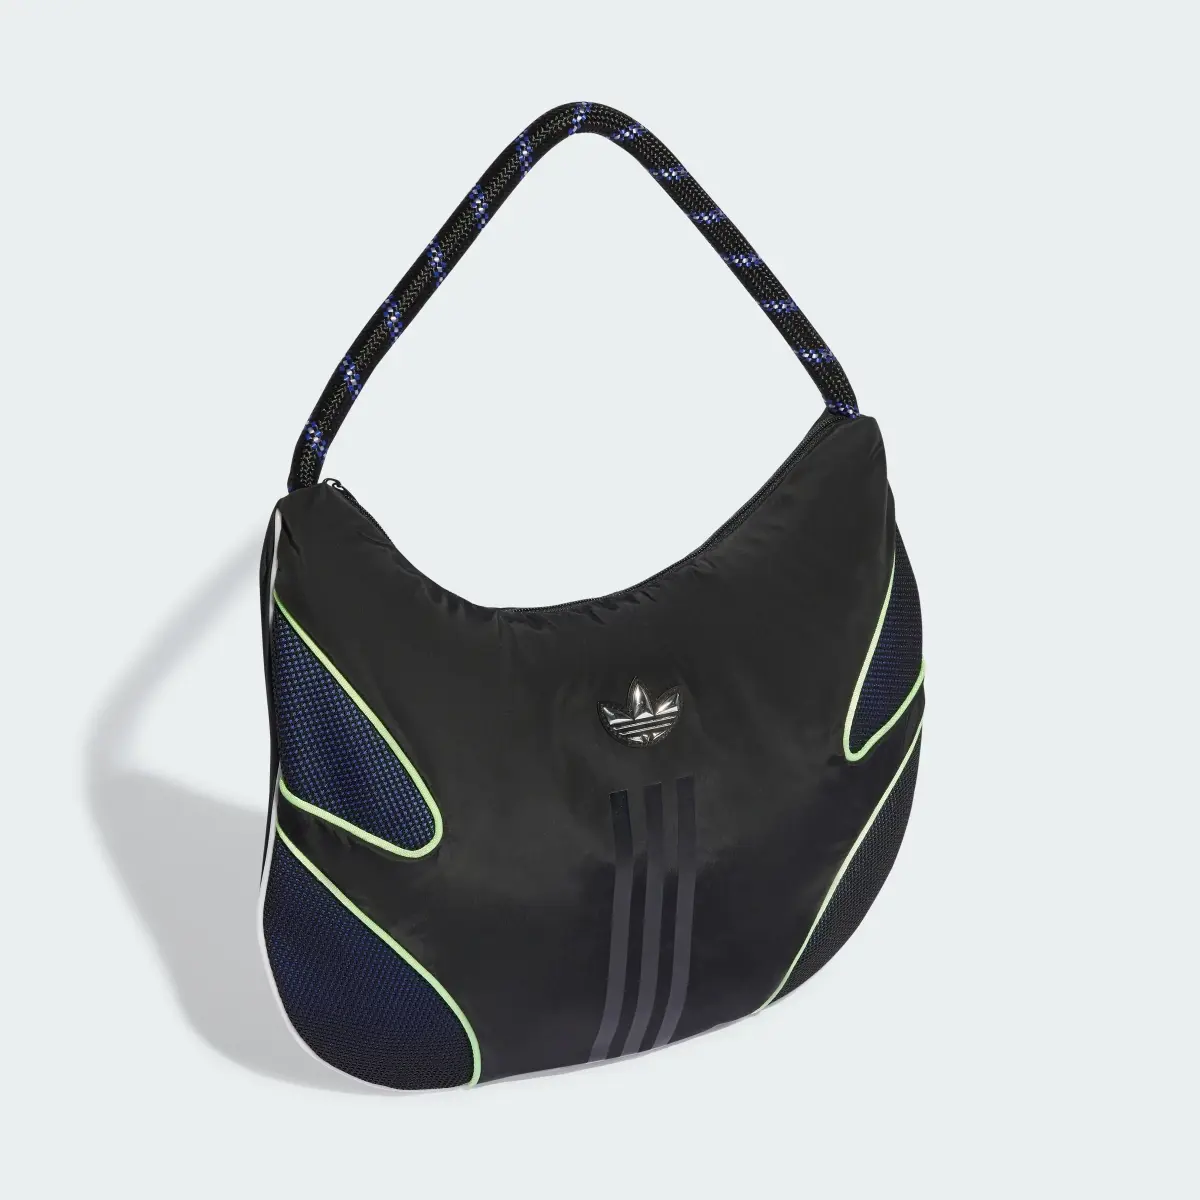 Adidas Shoulder Bag. 2